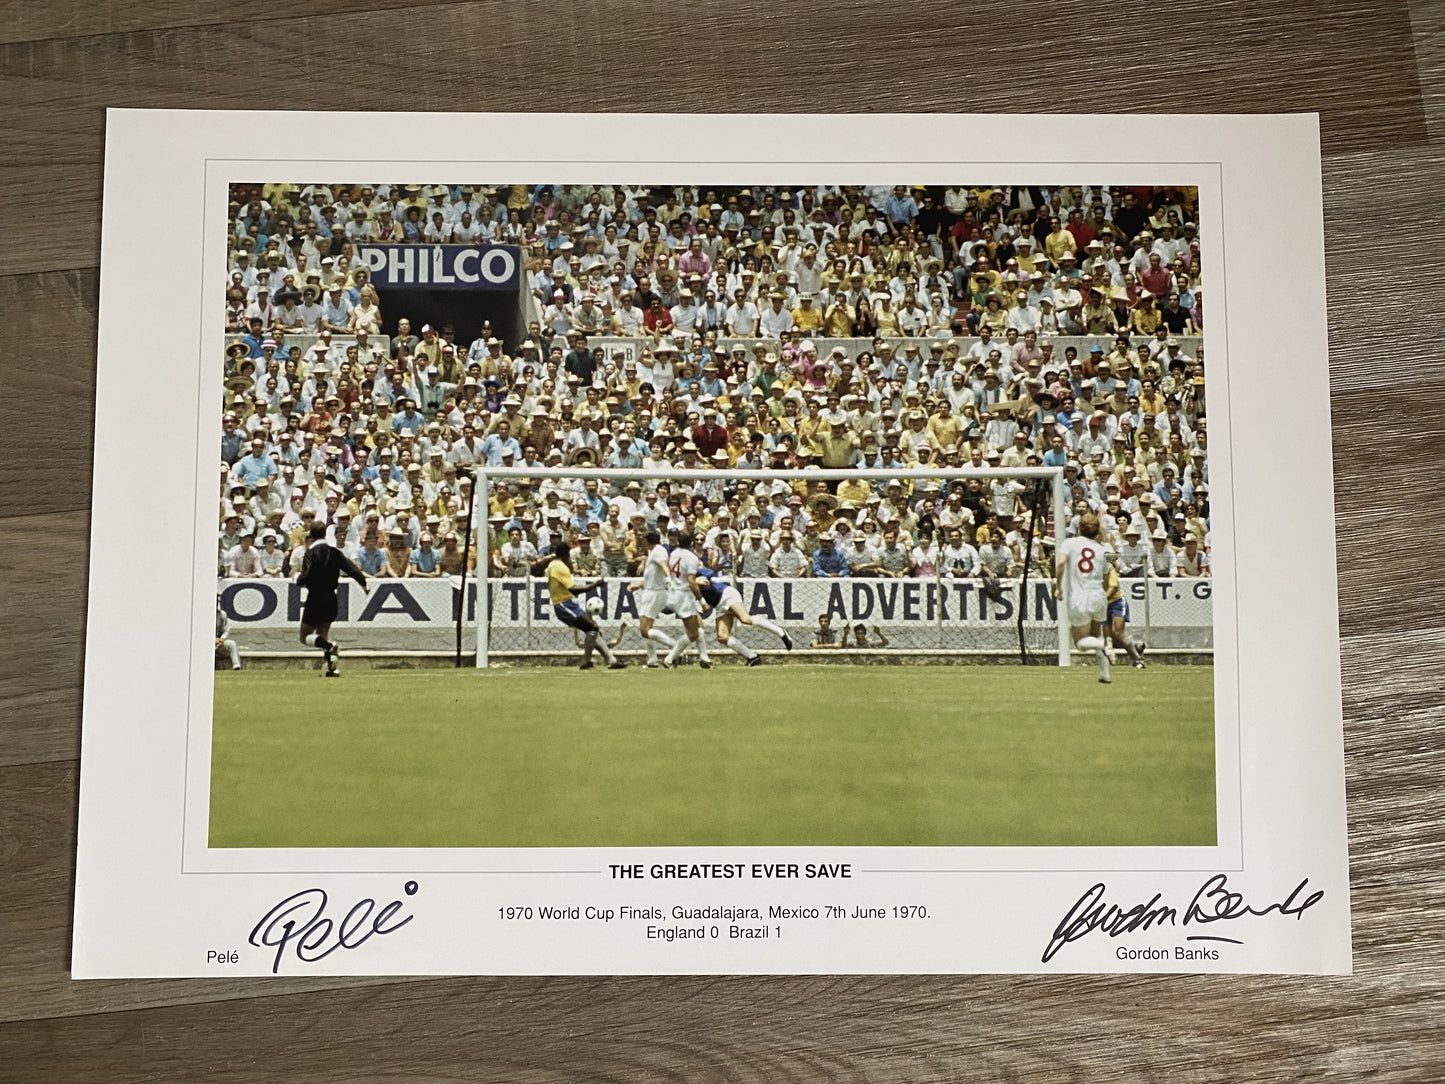 Pele & Gordan Banks Brazil 1970 world cup final "THE SAVE" - huge 50x35cm poster - PELE/BANKS memorabilia, gift, (UNFRAMED)